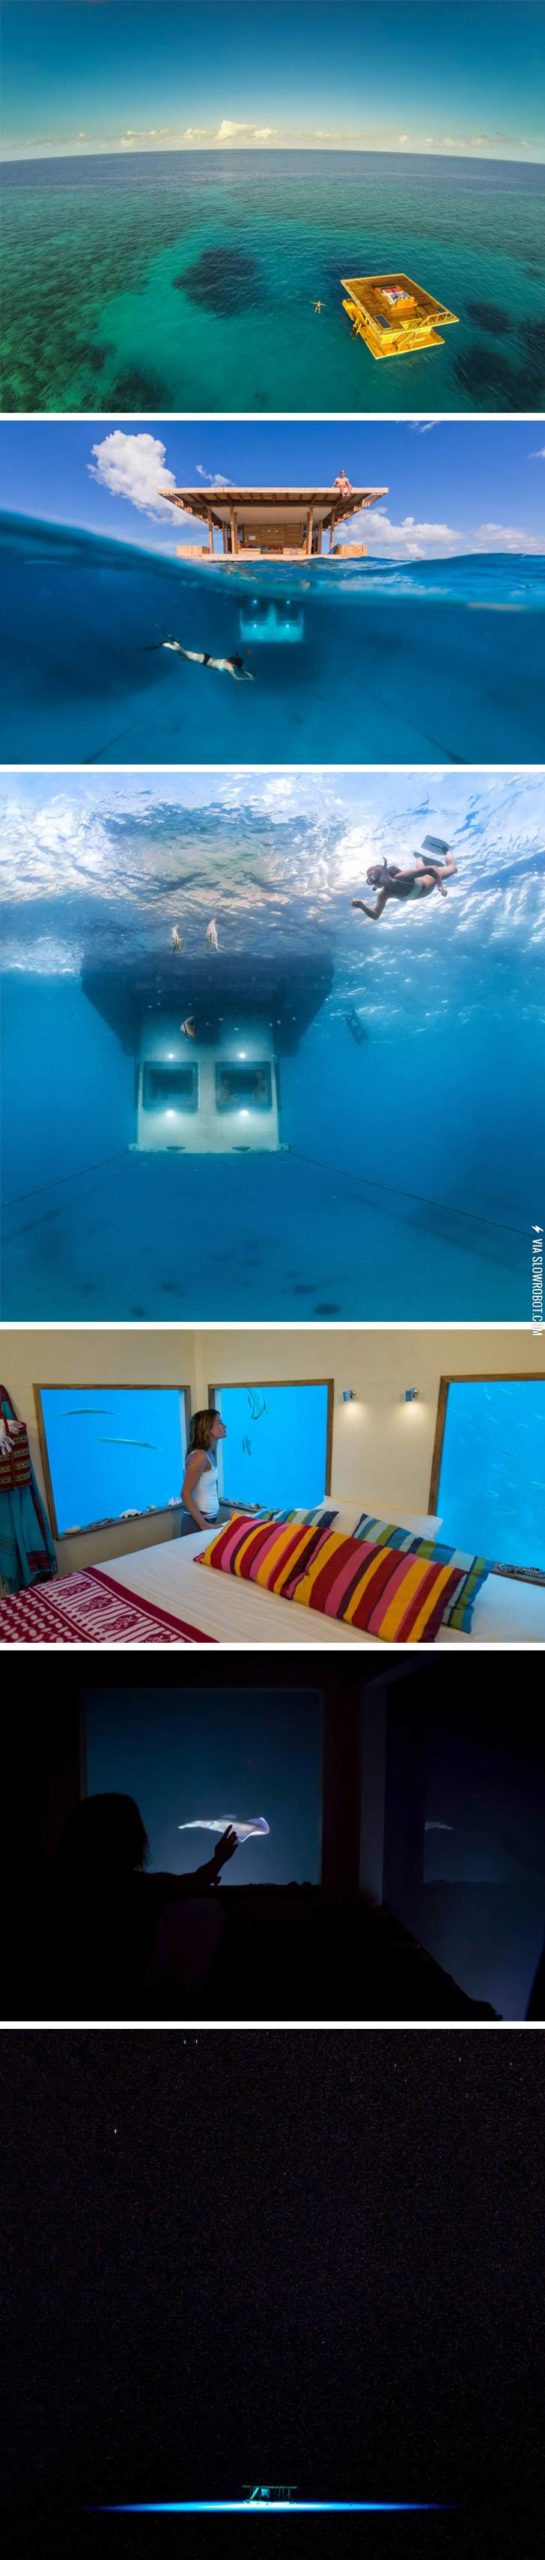 Underwater+floating+hotel+room+in+Zanzibar.